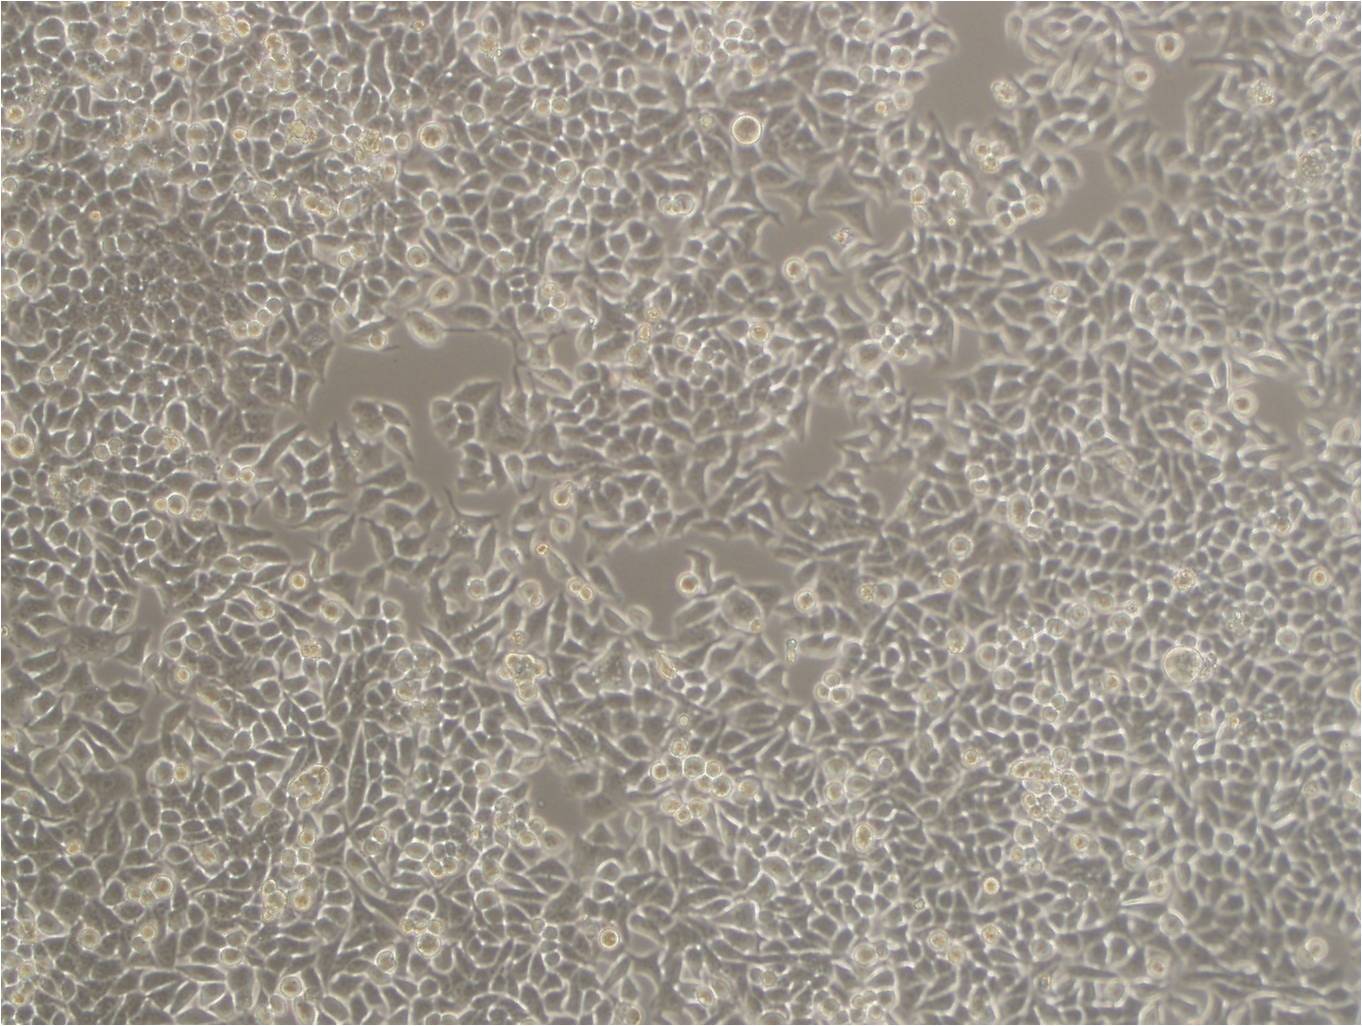 CC-LP-1 epithelioid cells人胆管癌细胞系,CC-LP-1 epithelioid cells